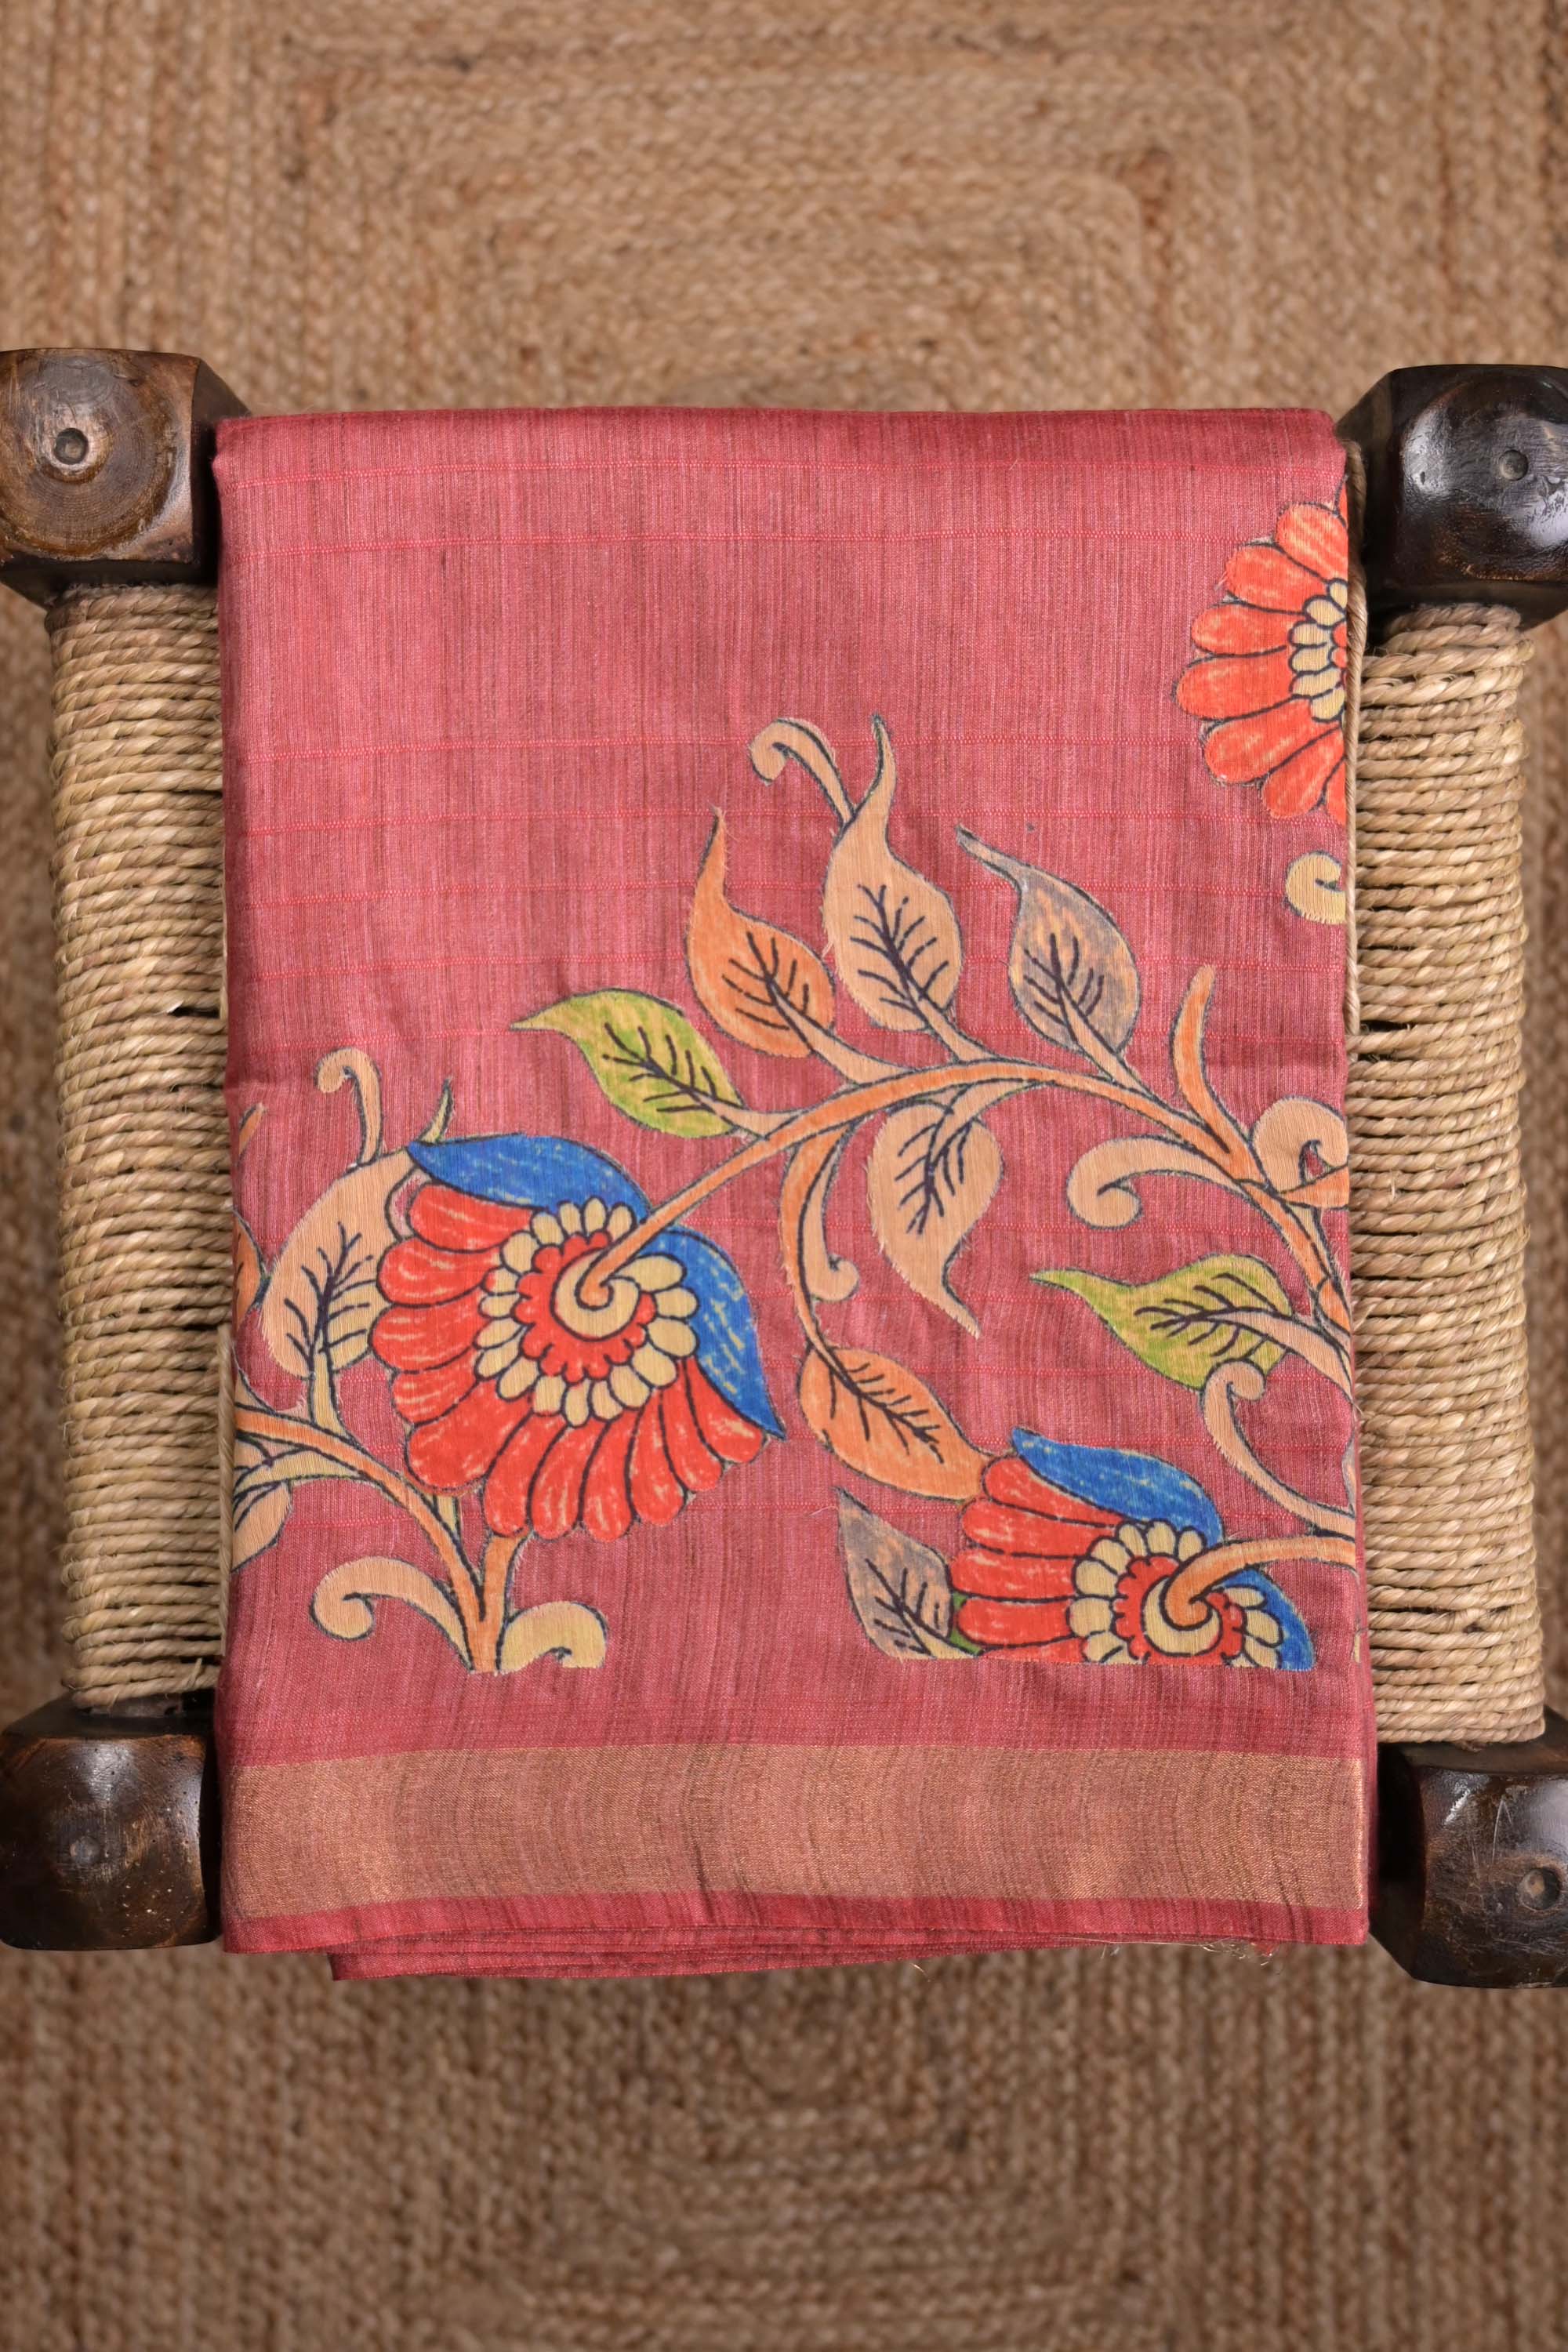 Tussar jute saree red color with kalamkari prints, big printed pallu, small kaddi border and printed blouse